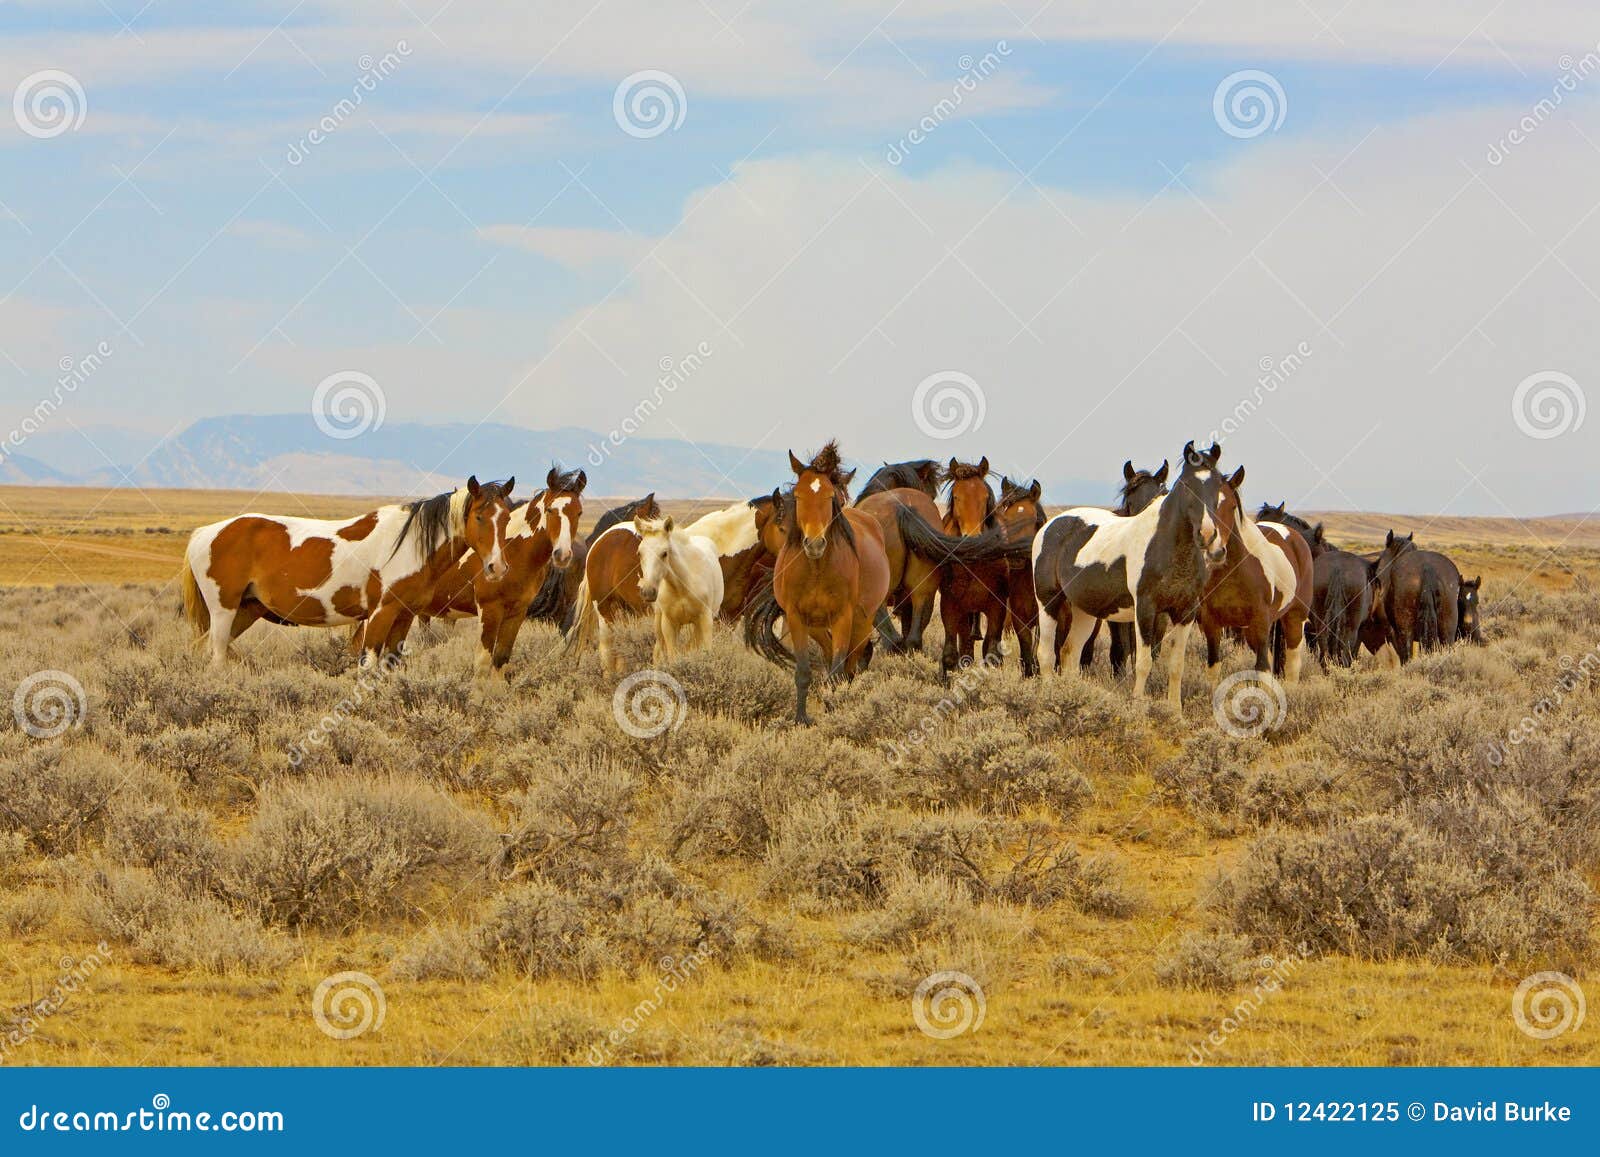 herd wild mustangs horses mustang horse sagebrush